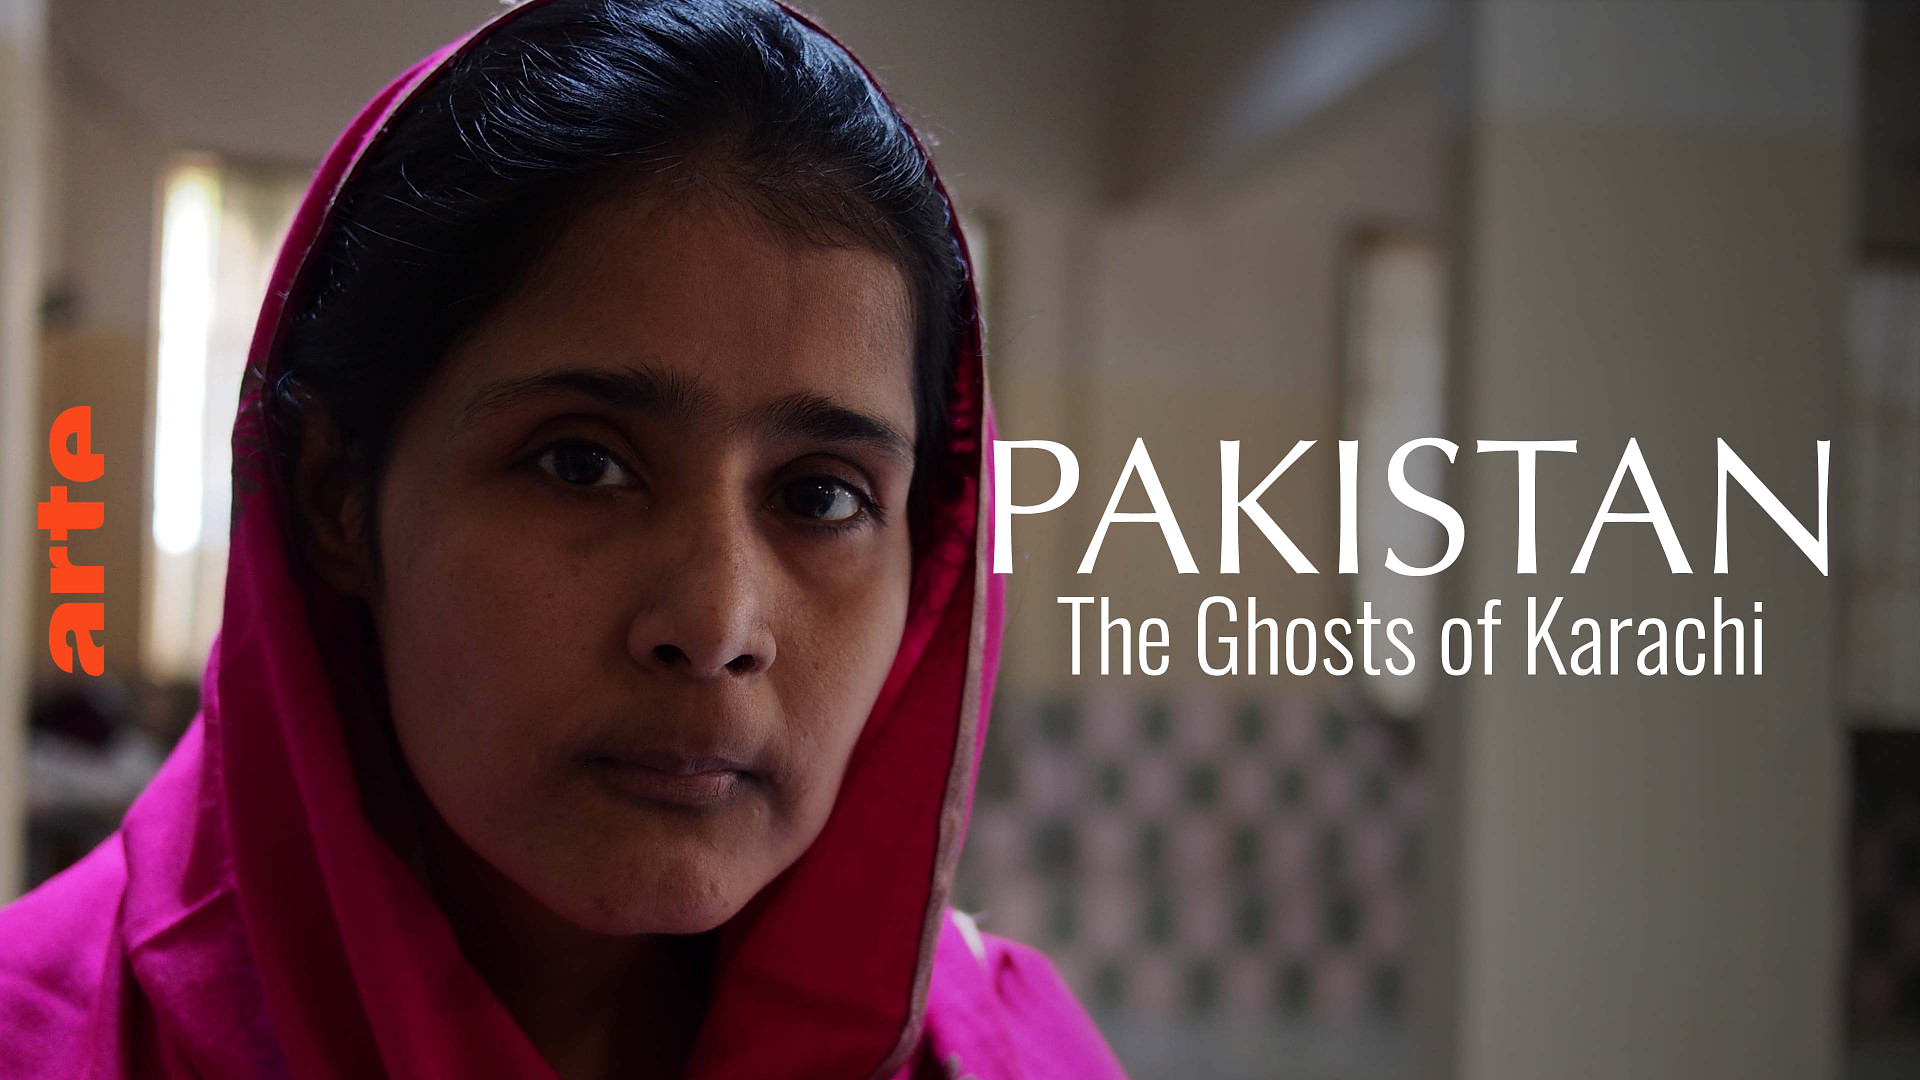 Pakistan Blasphemy Law Documentary Goes For Emmy Victory